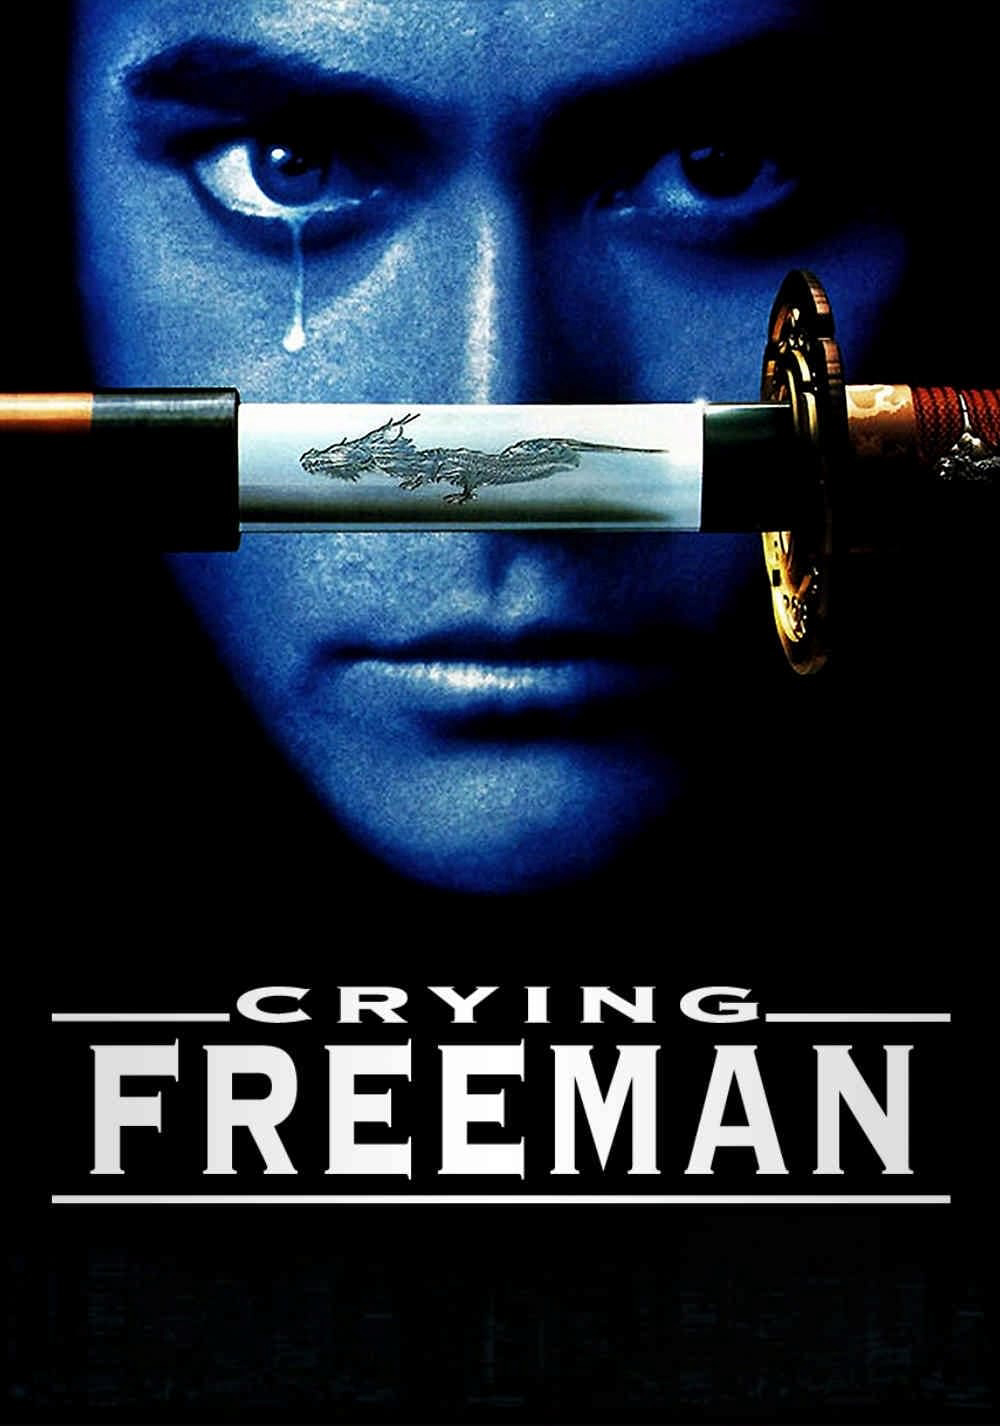 Crying Freeman (Crying Freeman) [1995]